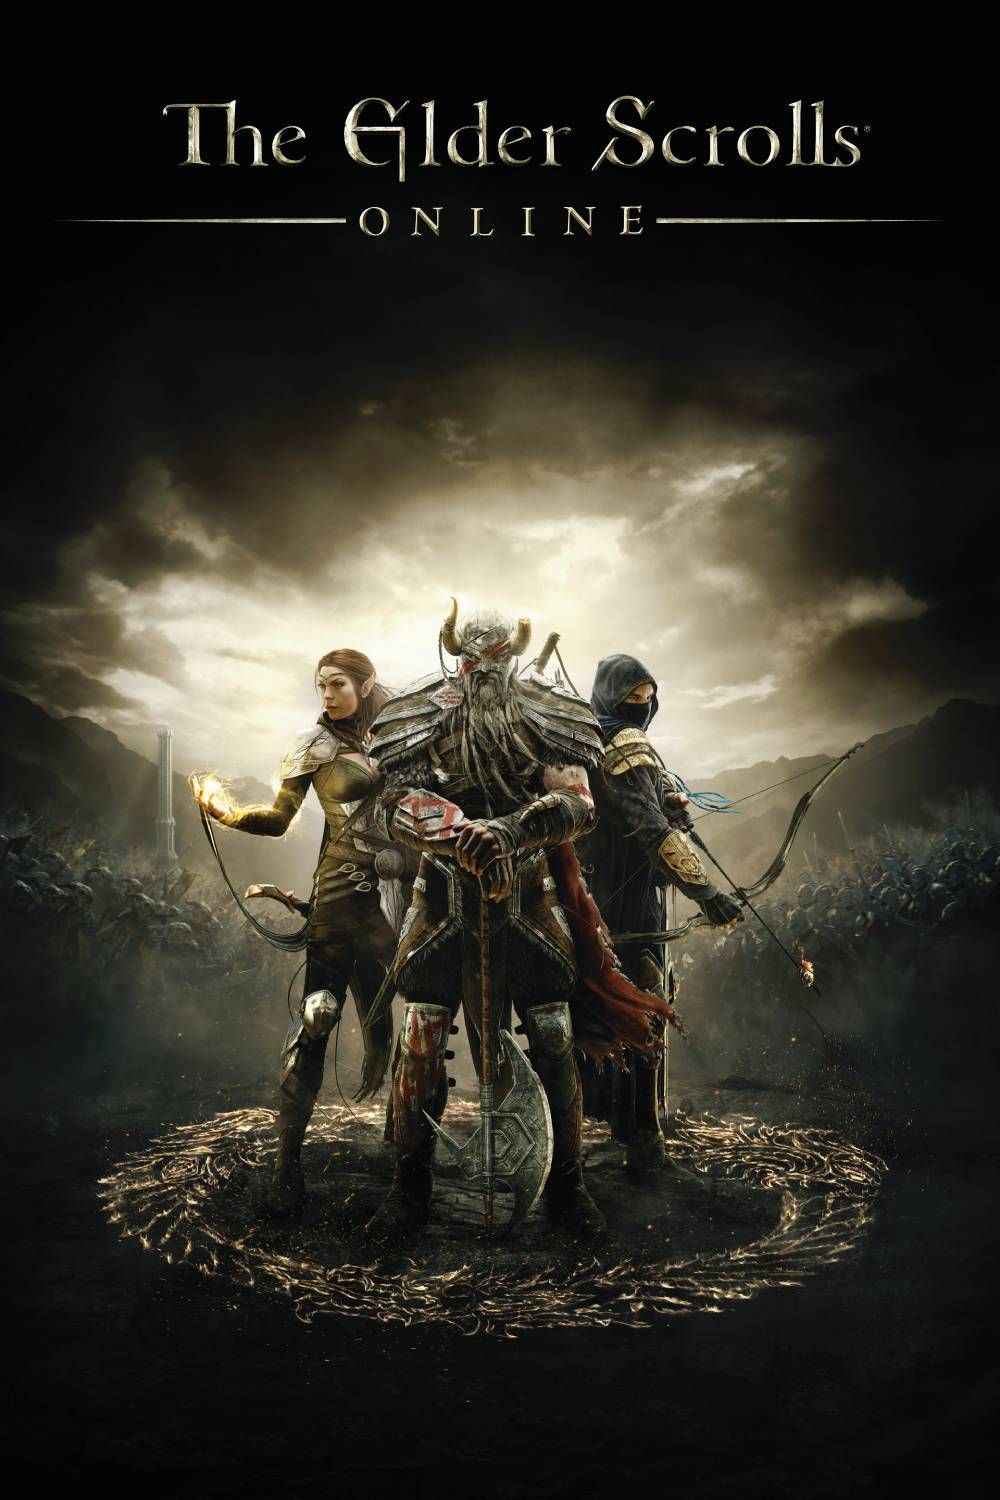 The Elder Scrolls Online Cover